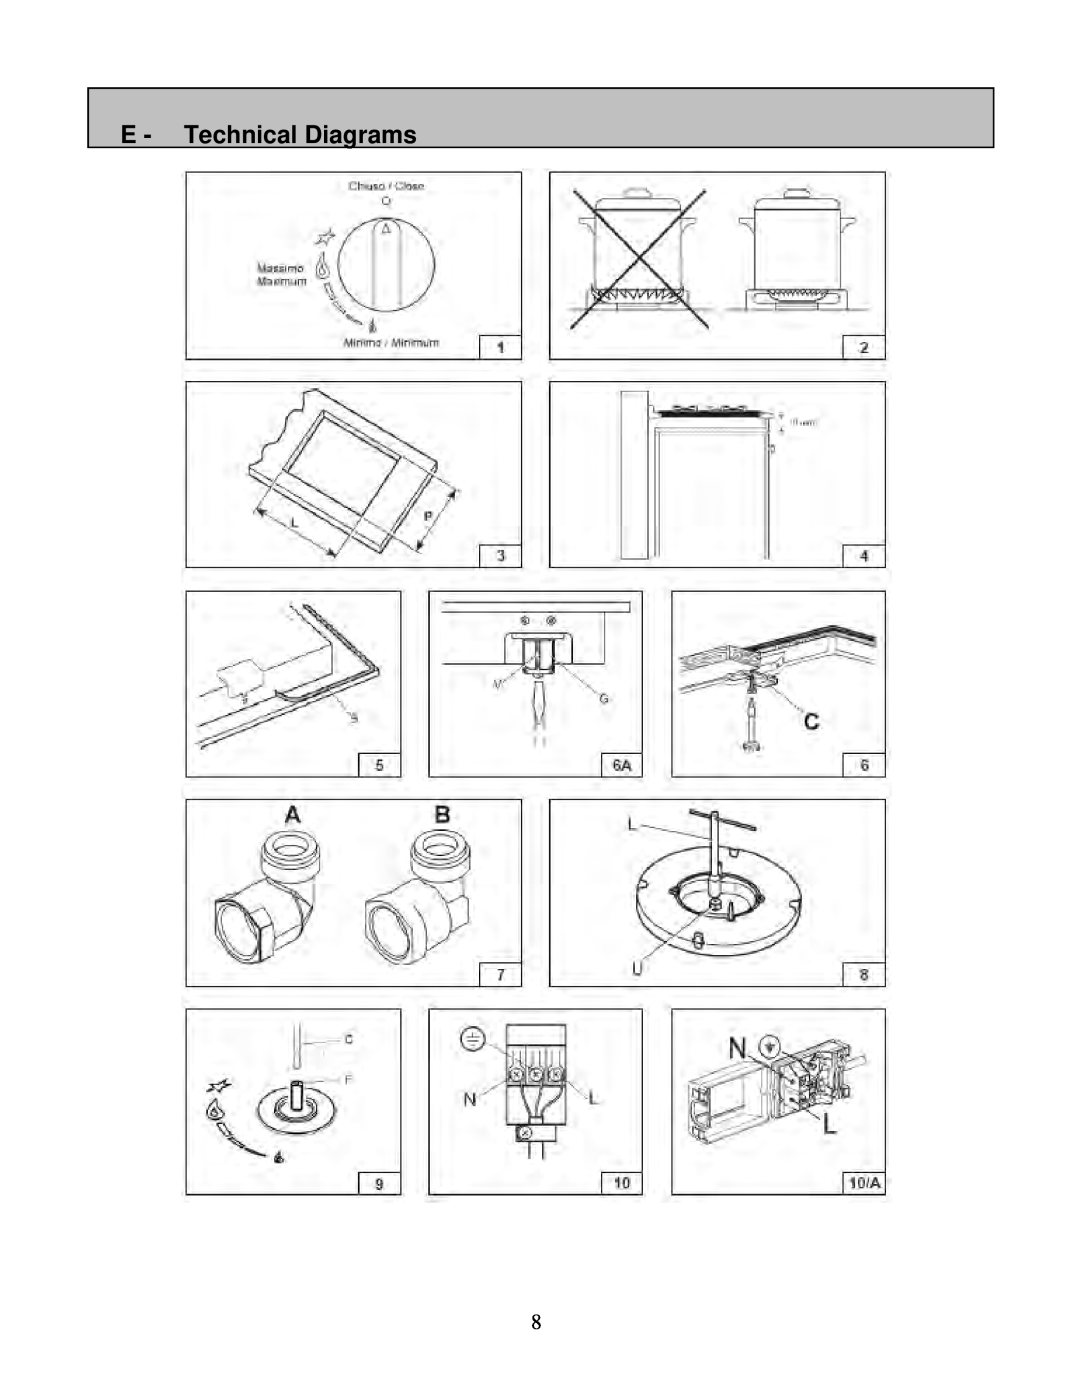 AEG 6524gm-m user manual E - Technical Diagrams 